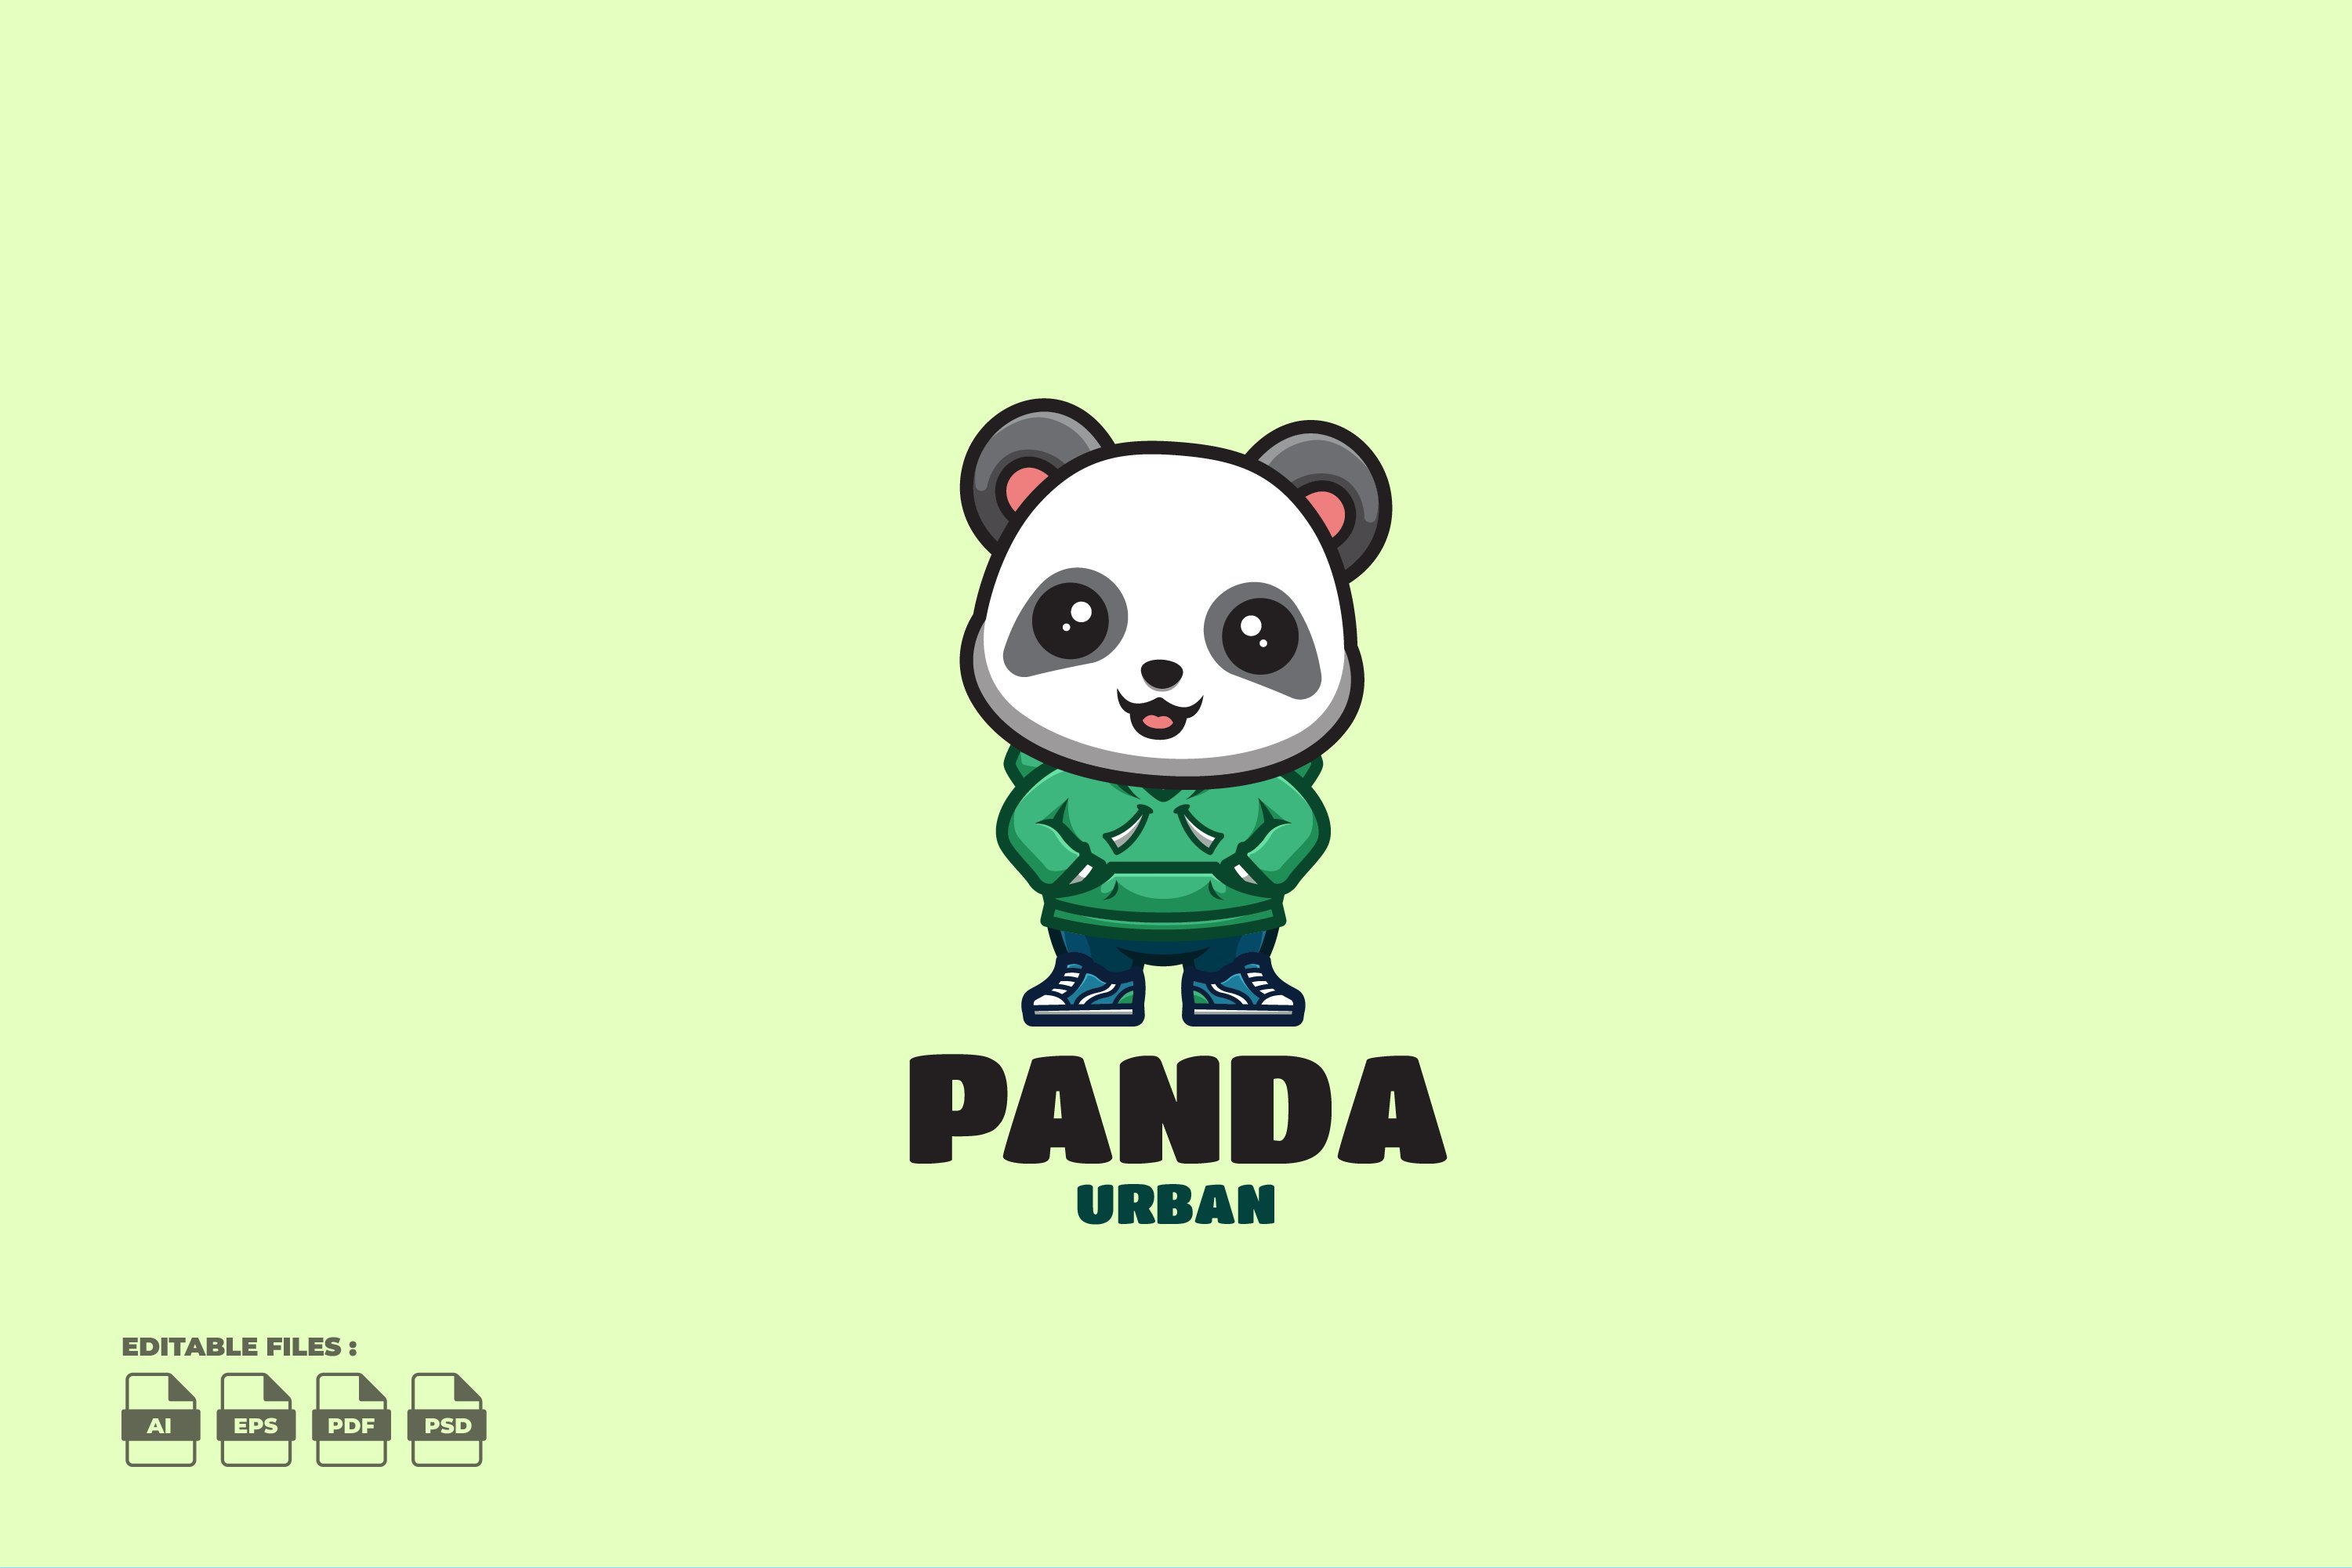 Urban Panda Cute Mascot Logo cover image.